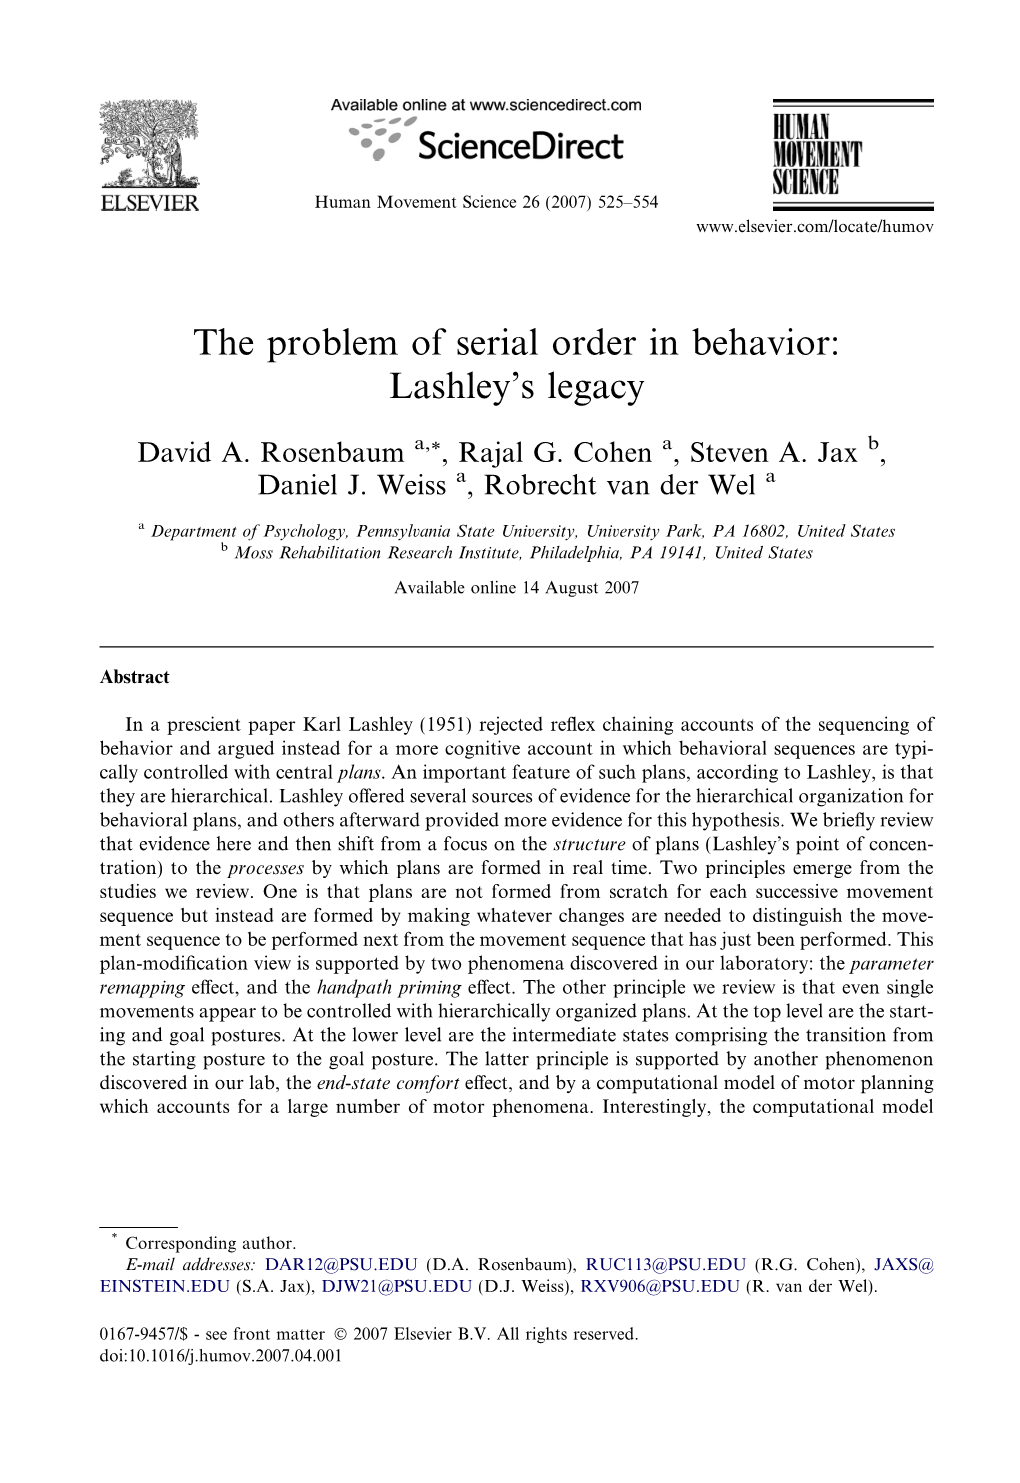 The Problem of Serial Order in Behavior: Lashley's Legacy